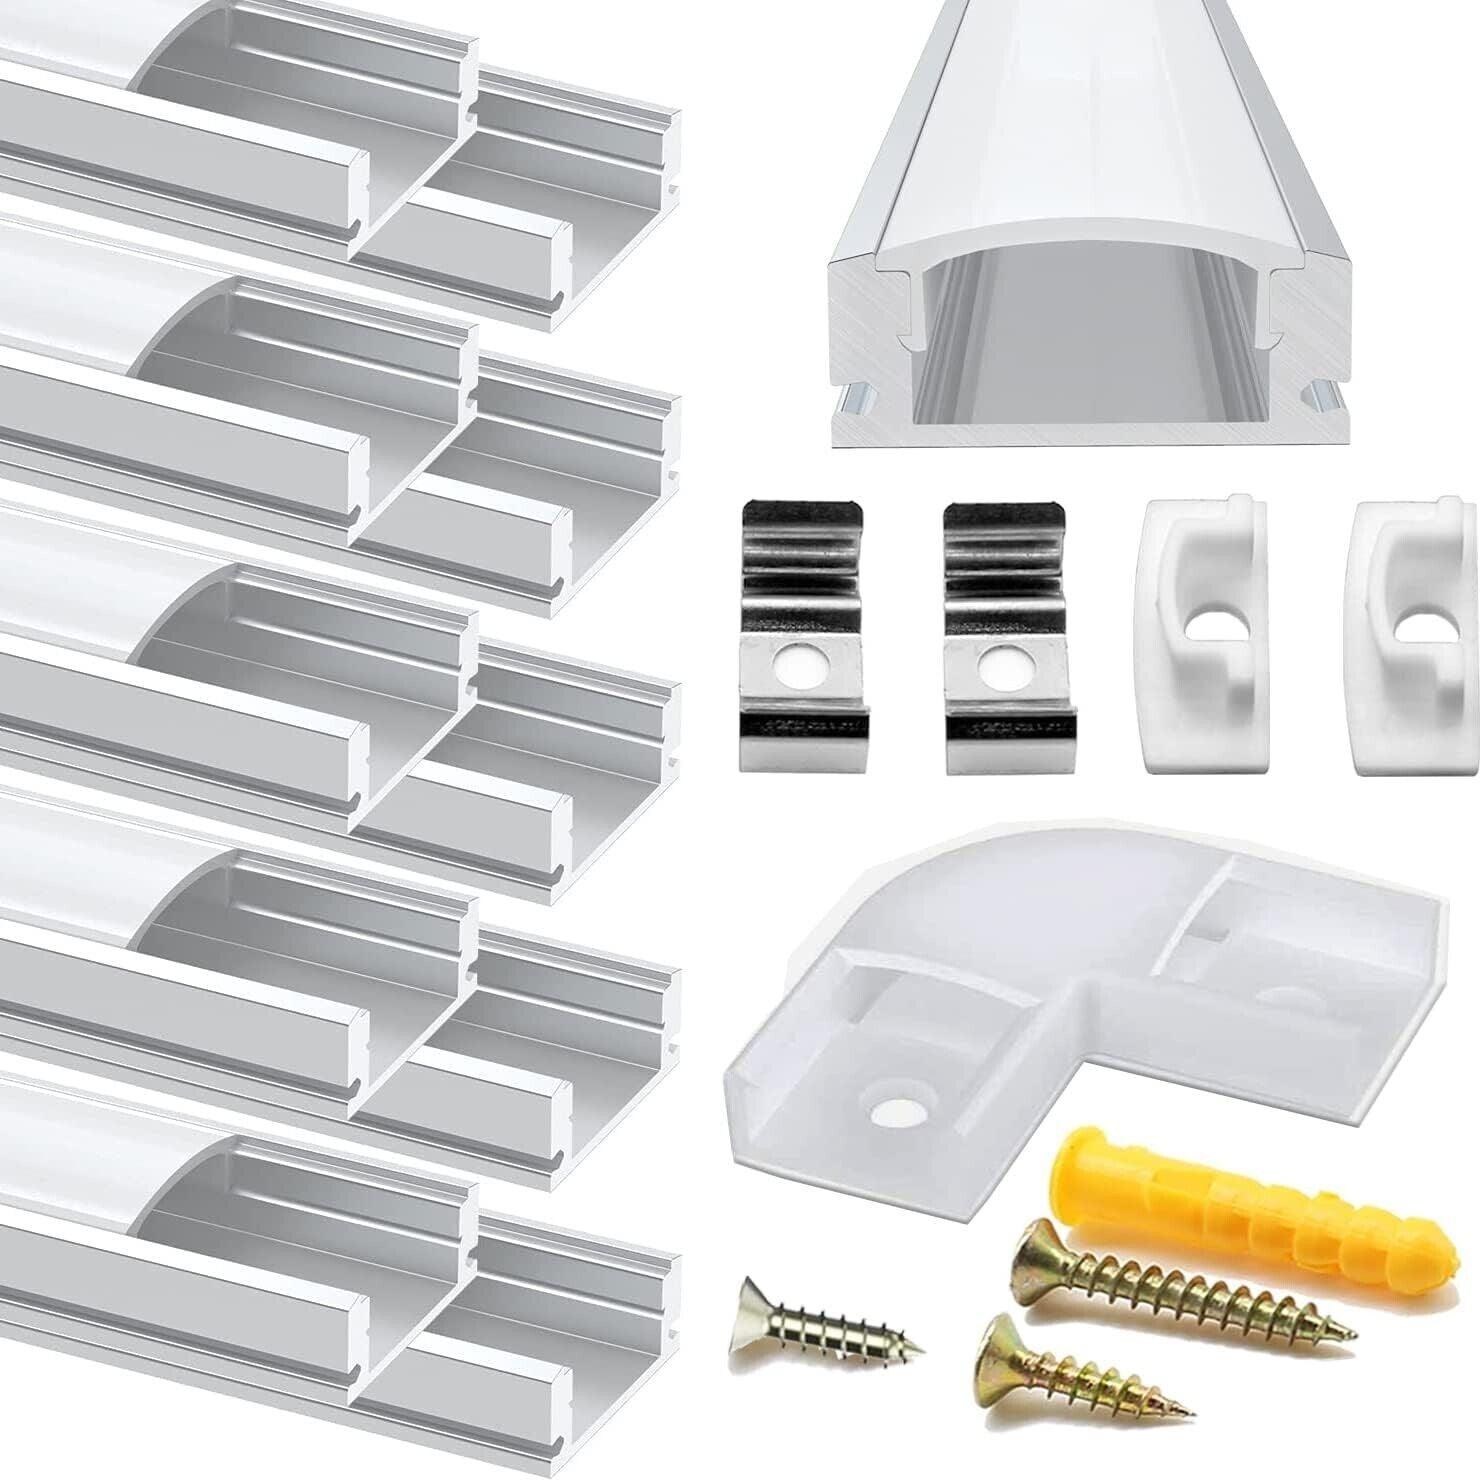 Led Aluminum Channel Profile 10 Pack 3.3ft U-Shape Milky White Cover - Massive Discounts